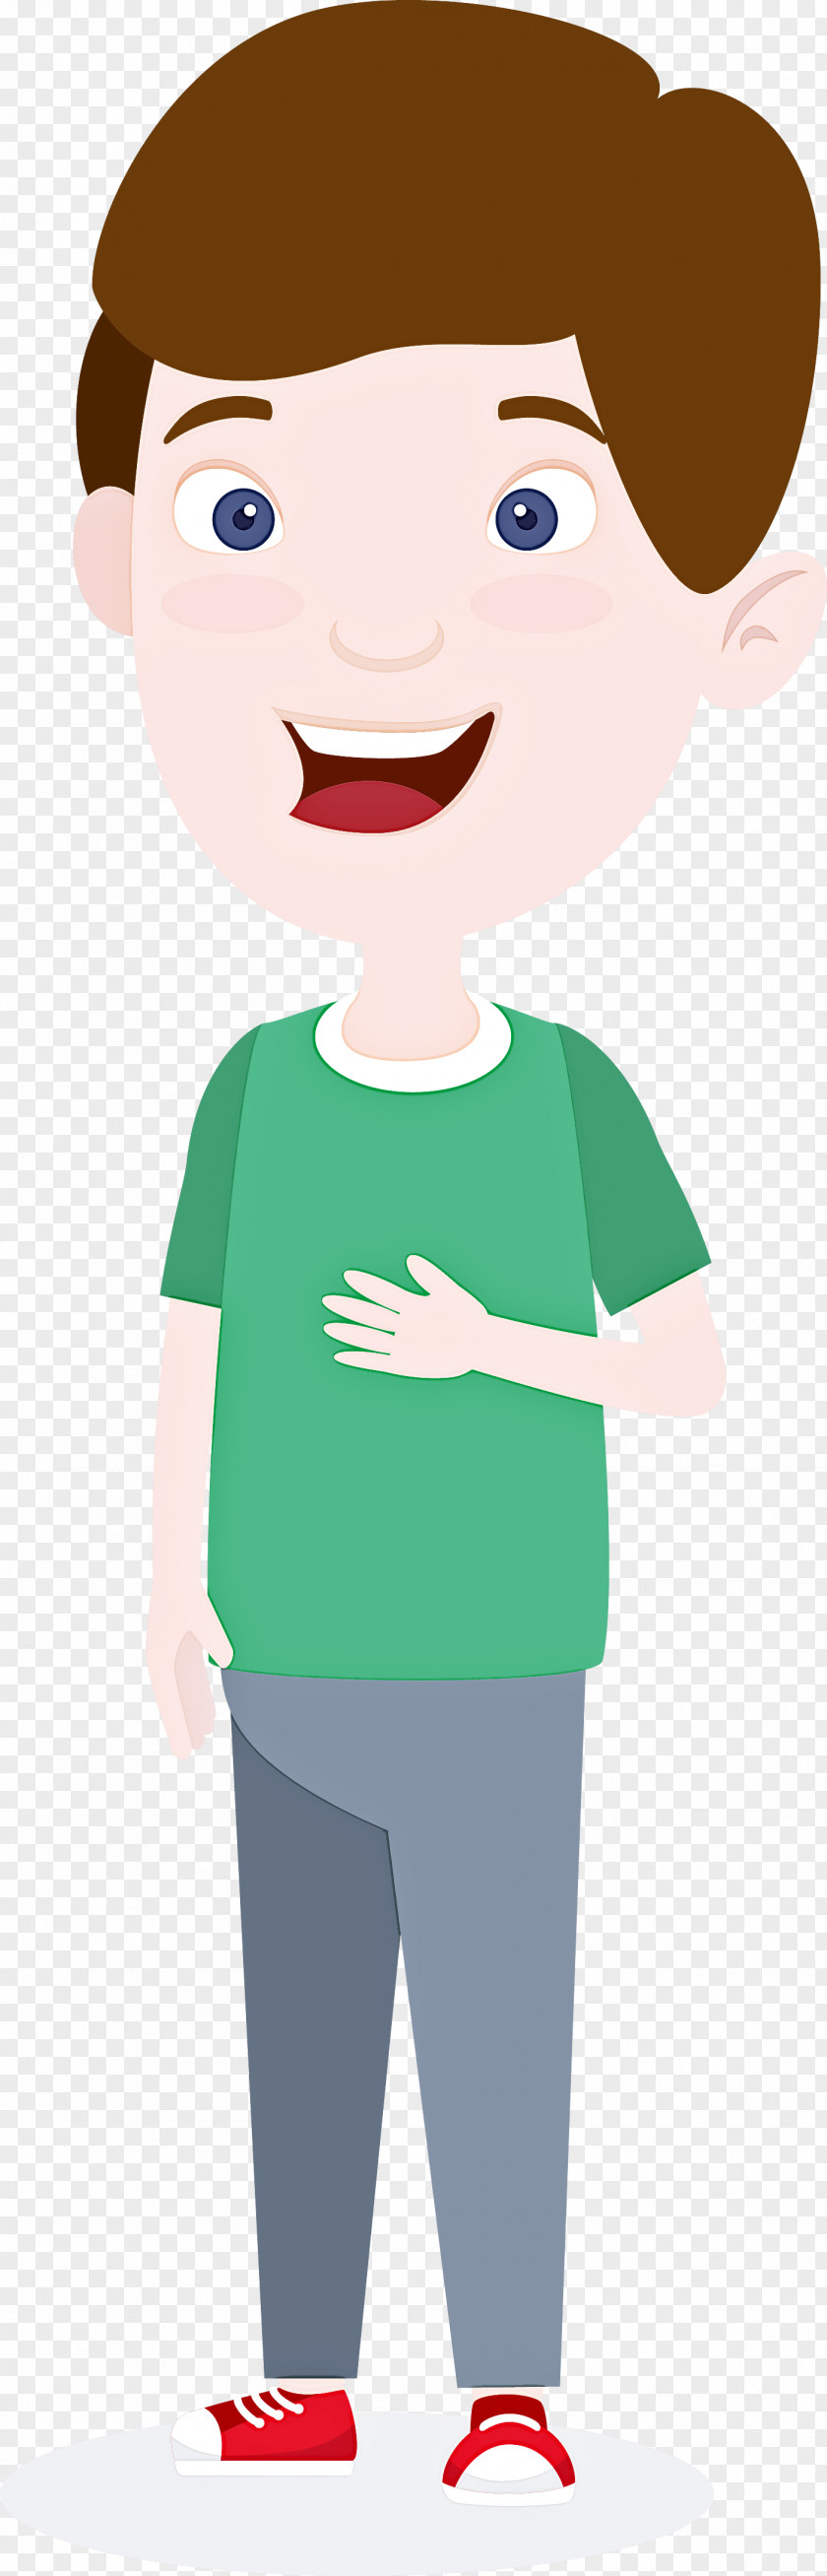 Green Cartoon T-shirt Sleeve Smile PNG